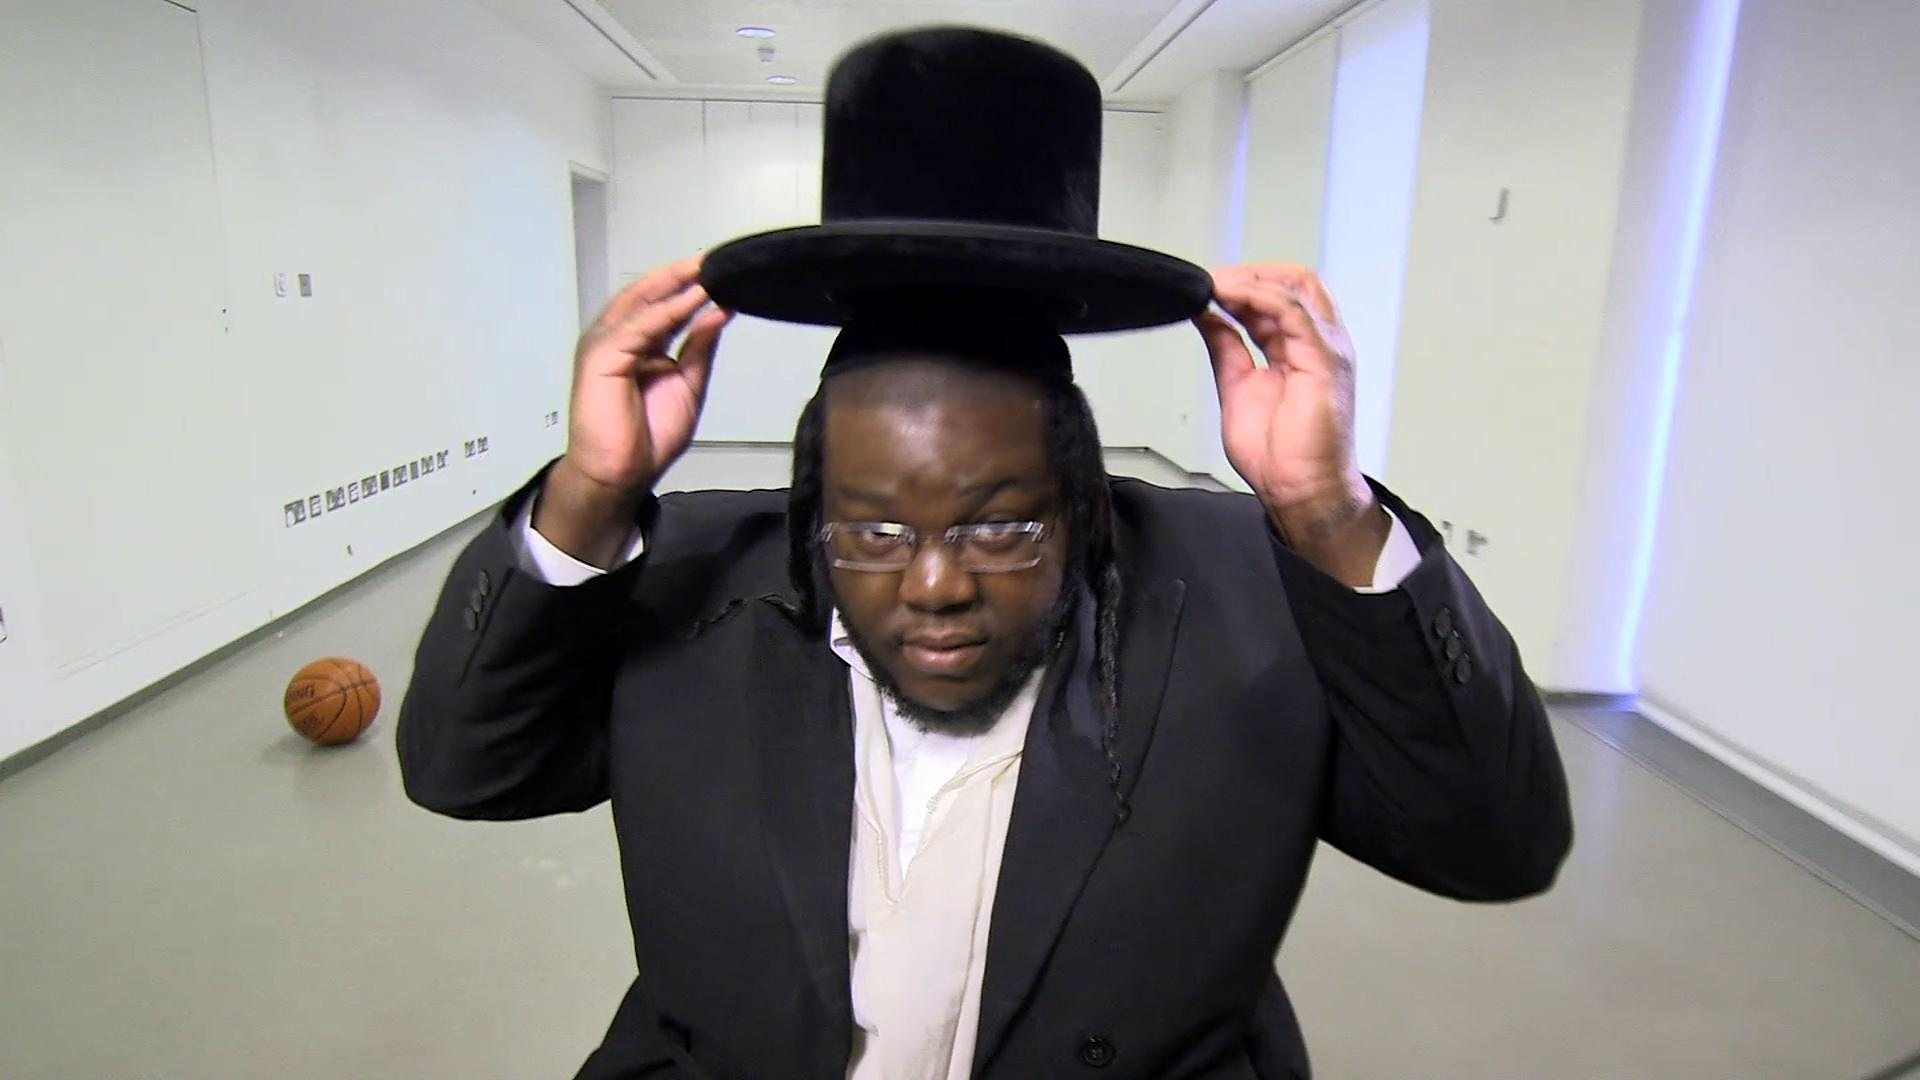 Gangster rapper Nissim Black on becoming an Orthodox Jew - BBC News